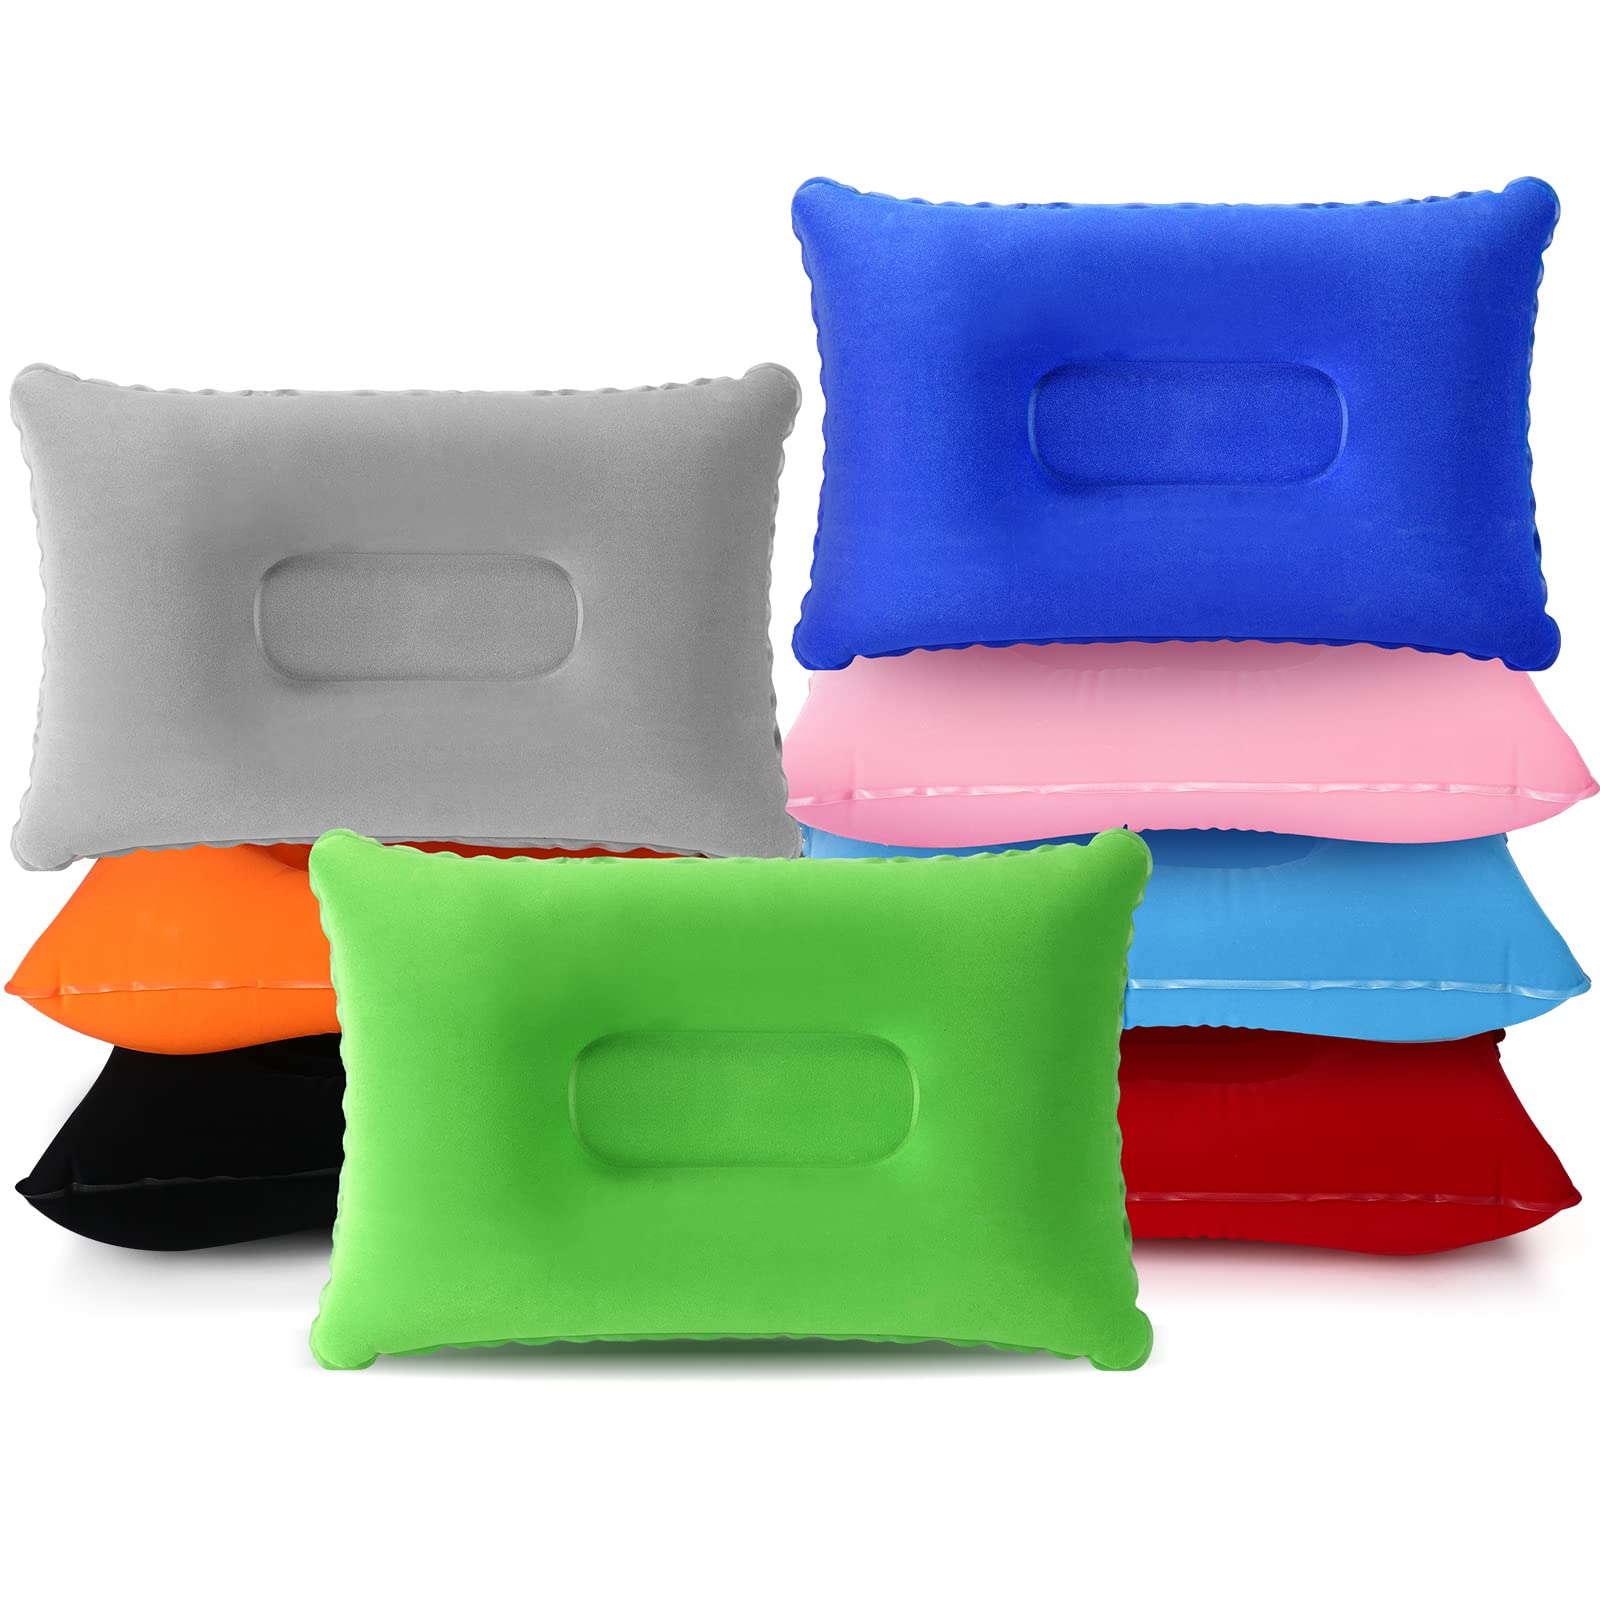 Lumbar Pillow Manually Inflatable Lumbar Support Cushion Fit For